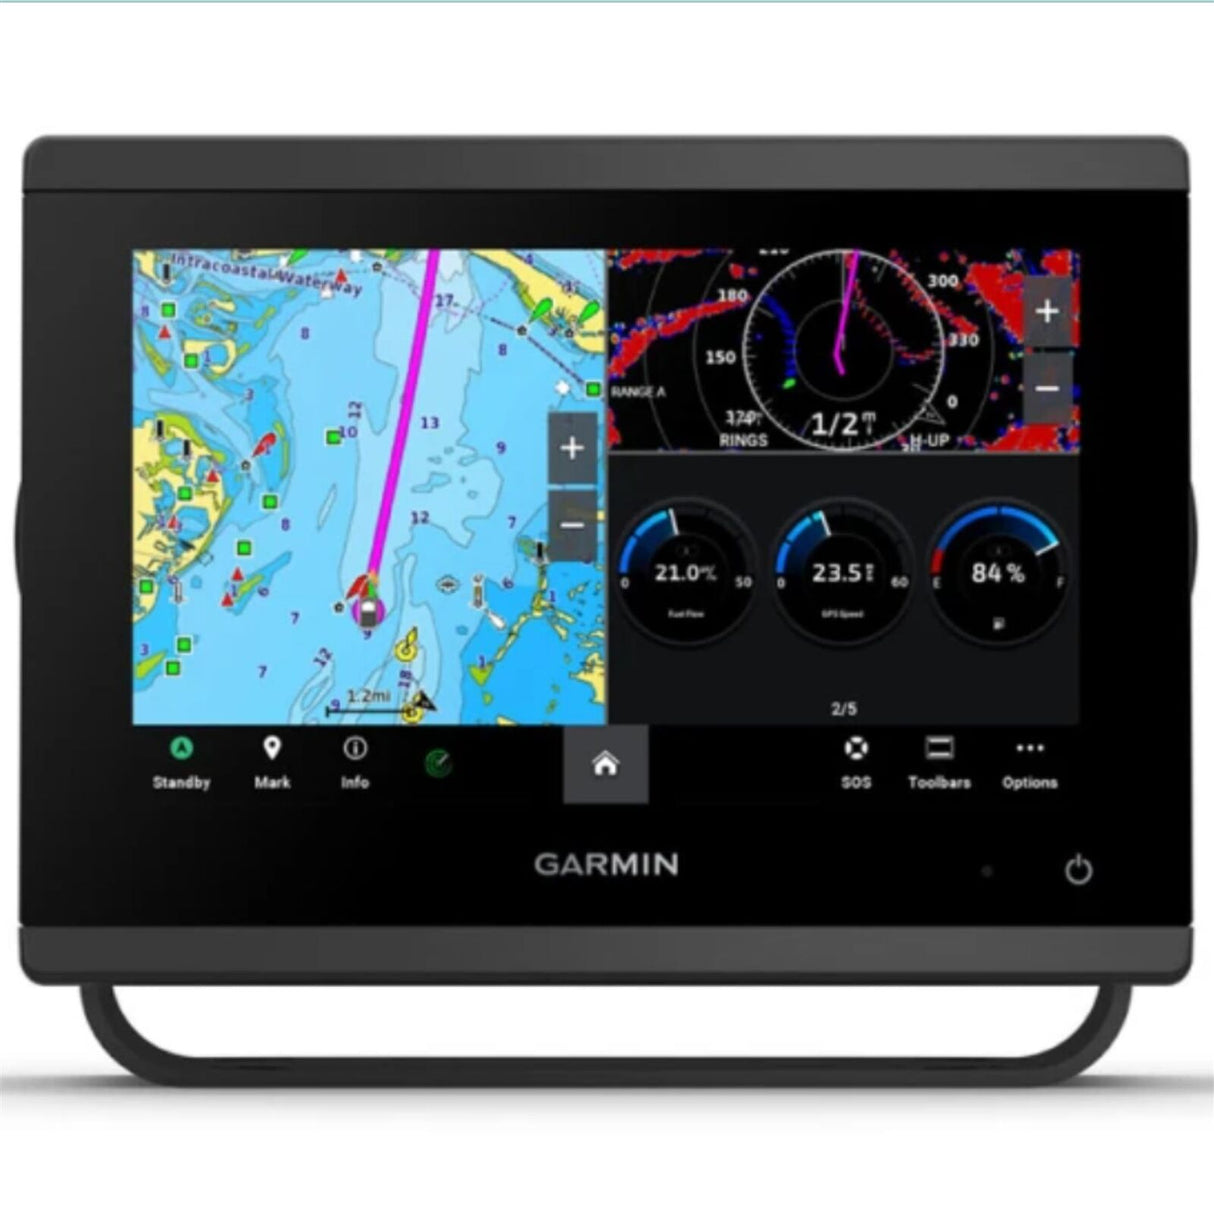 Garmin GPSMAP 723 - 7 Inch Marine ChartPlotter Only, Worldwide Basemap